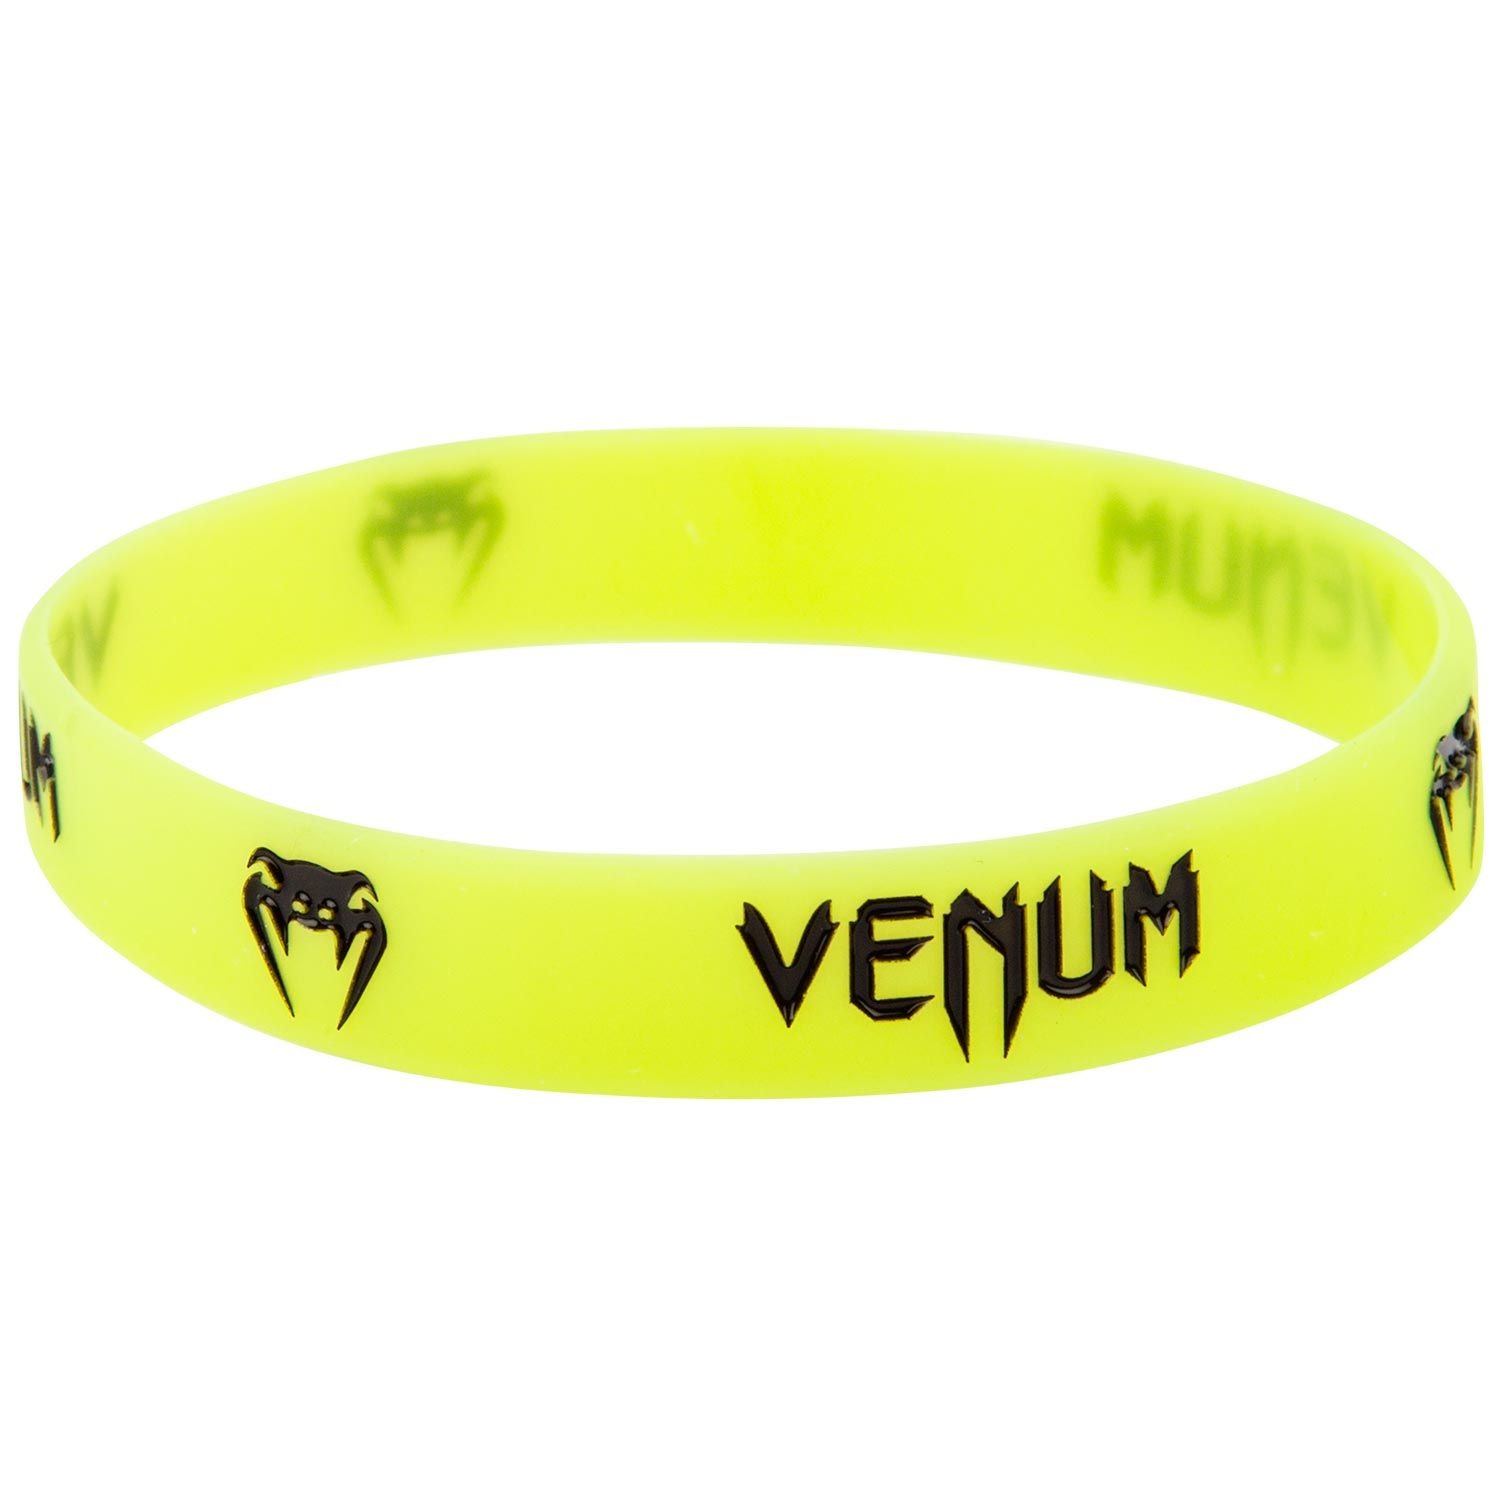 Venum Rubber Band Wristband Black Venum Accessories